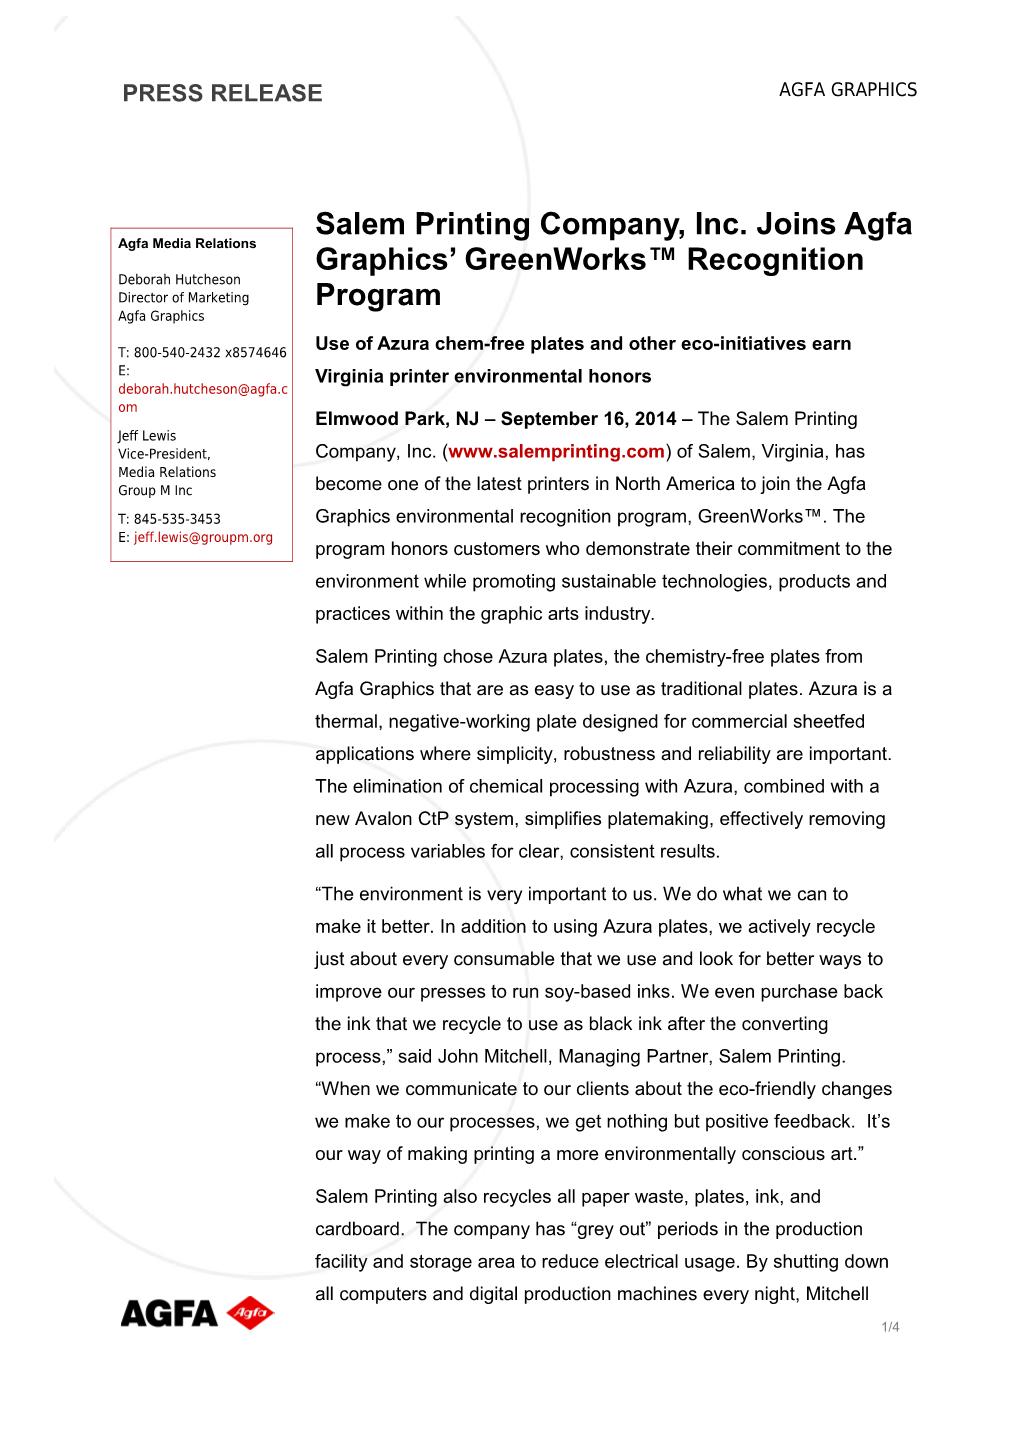 Salem Printing Company, Inc. Joins Agfa Graphics Greenworks Recognition Program